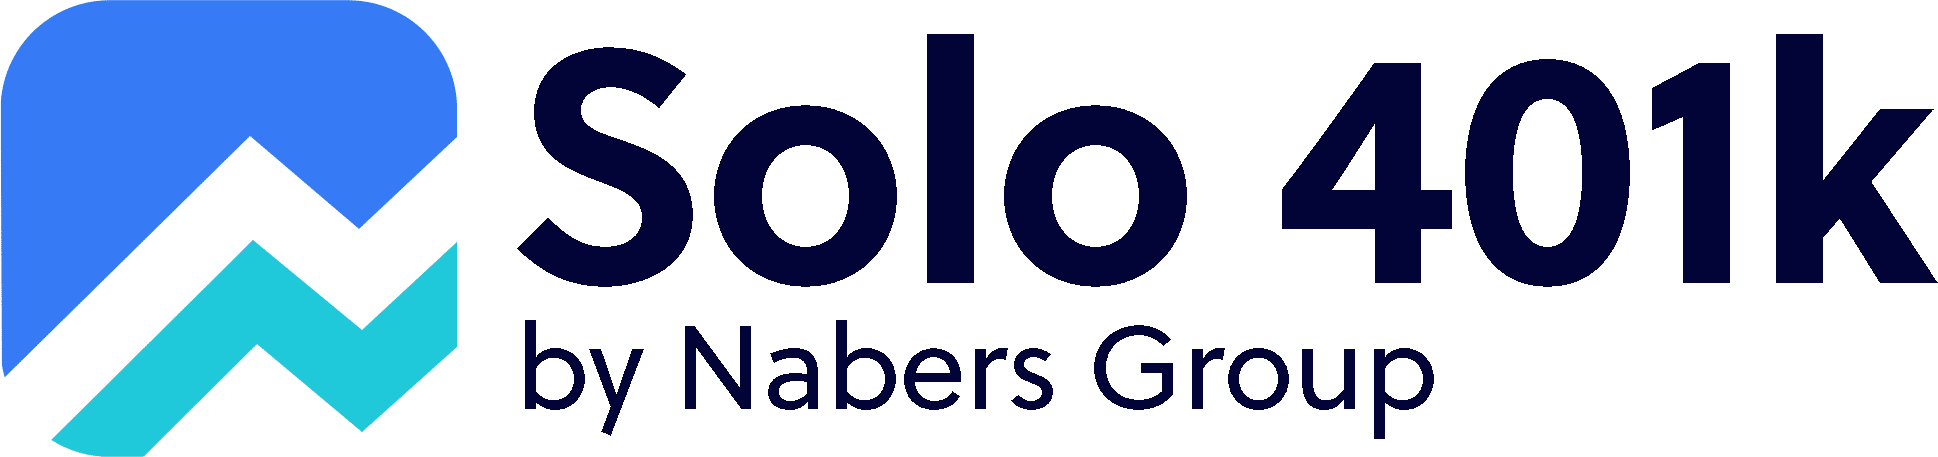 Logotipo de Solo 401k de Nabers Group